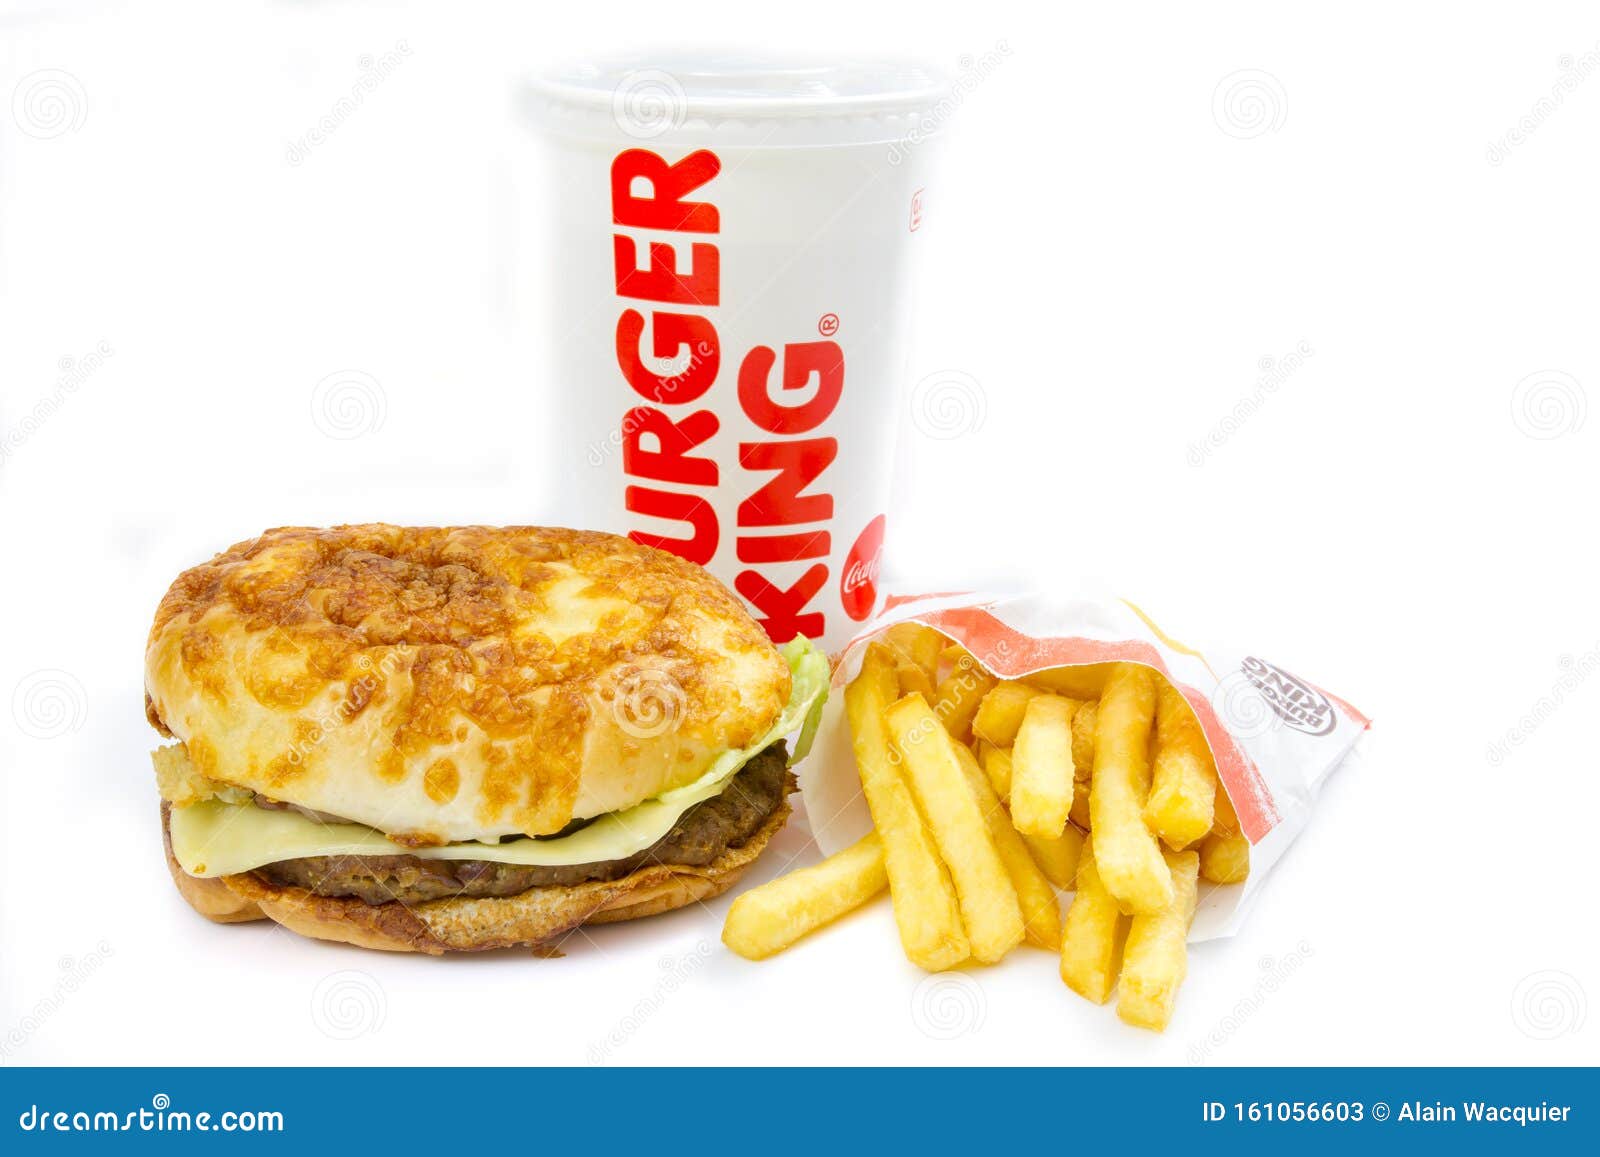 burger king menu